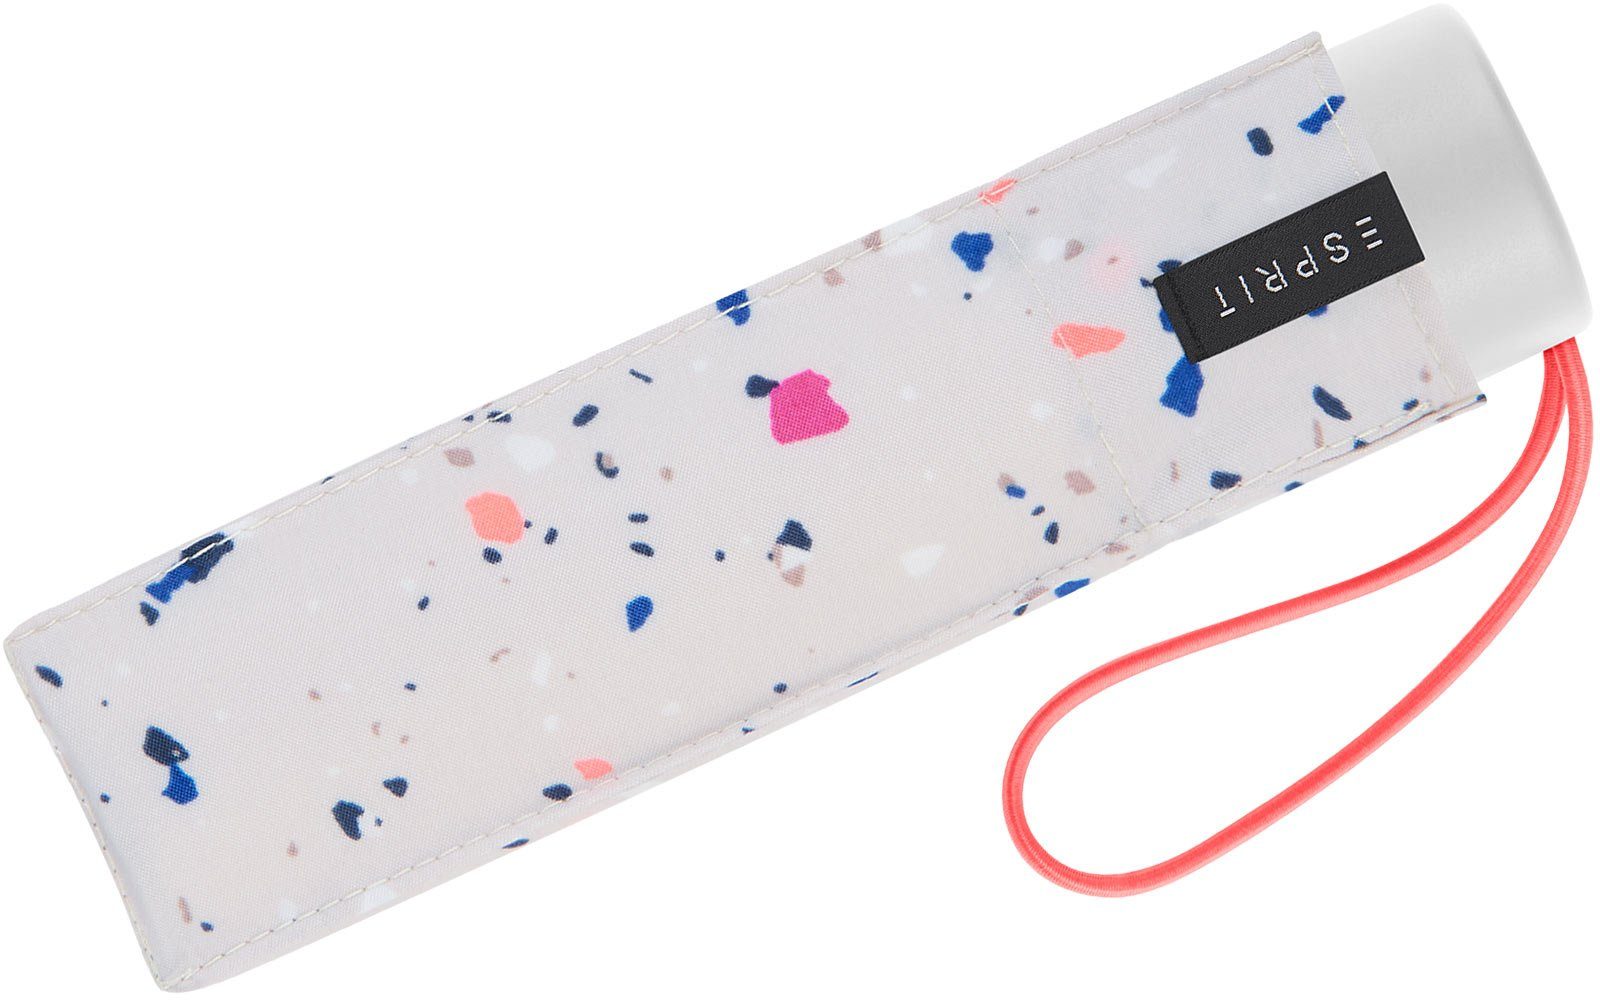 Esprit Taschenregenschirm Mini - in - Petito den neuen weiß, Dots klein, winzig Trendfarben Regenschirm Terrazzo